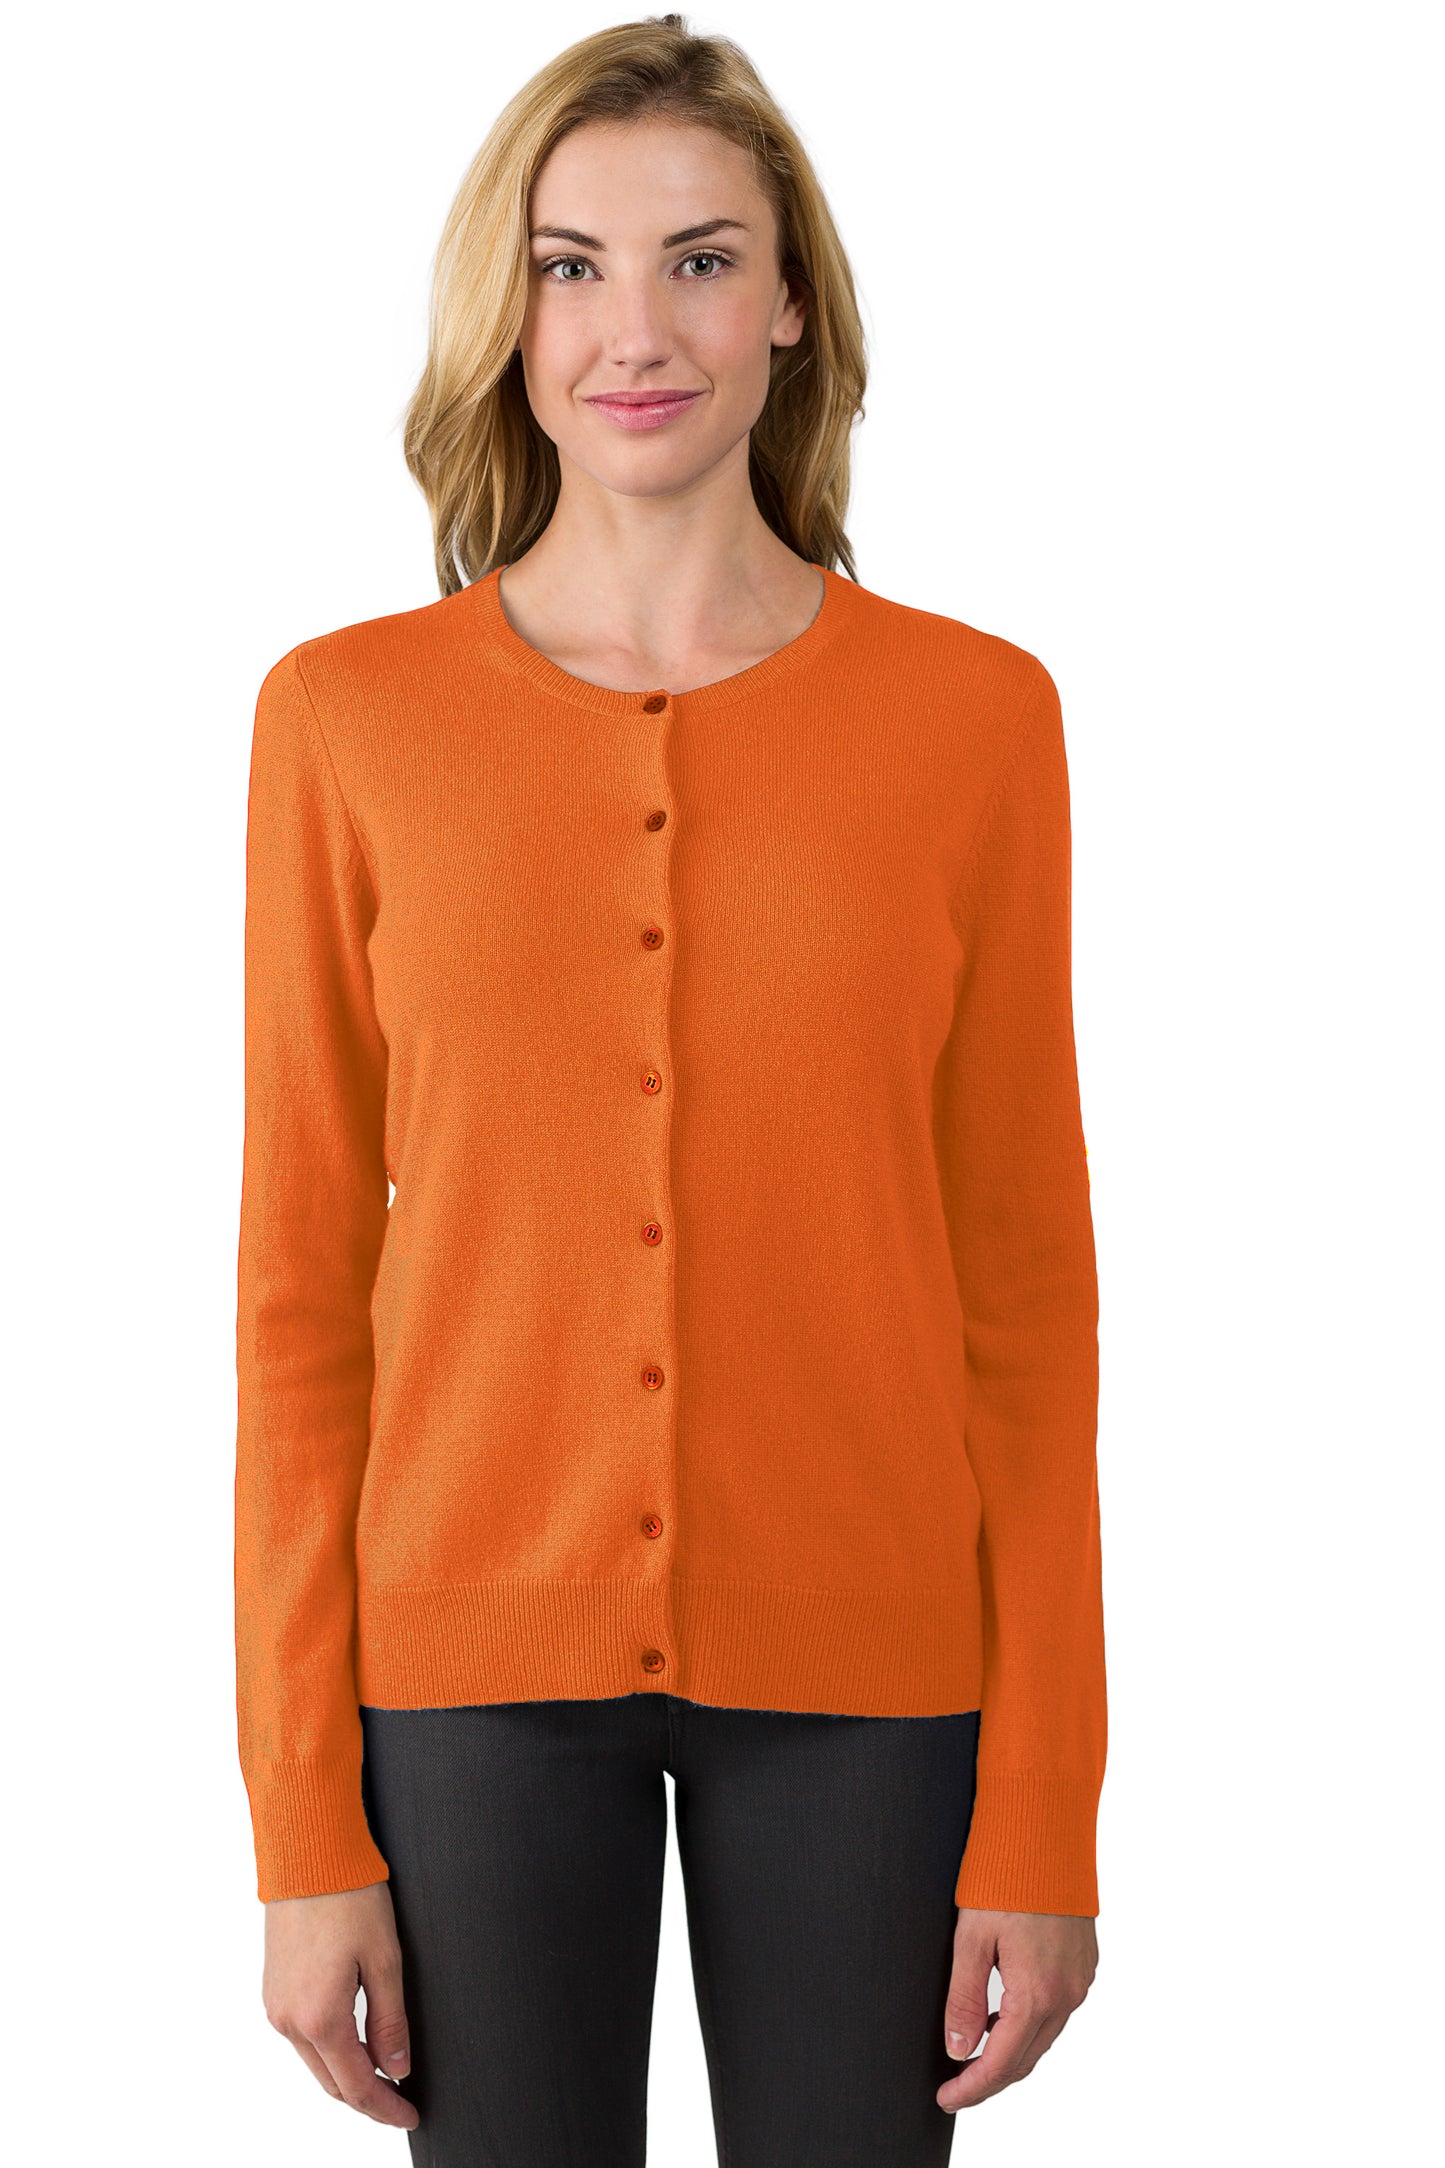 JENNIE LIU Women's 100% Cashmere Button Front Long Sleeve Crewneck Cardigan Sweater